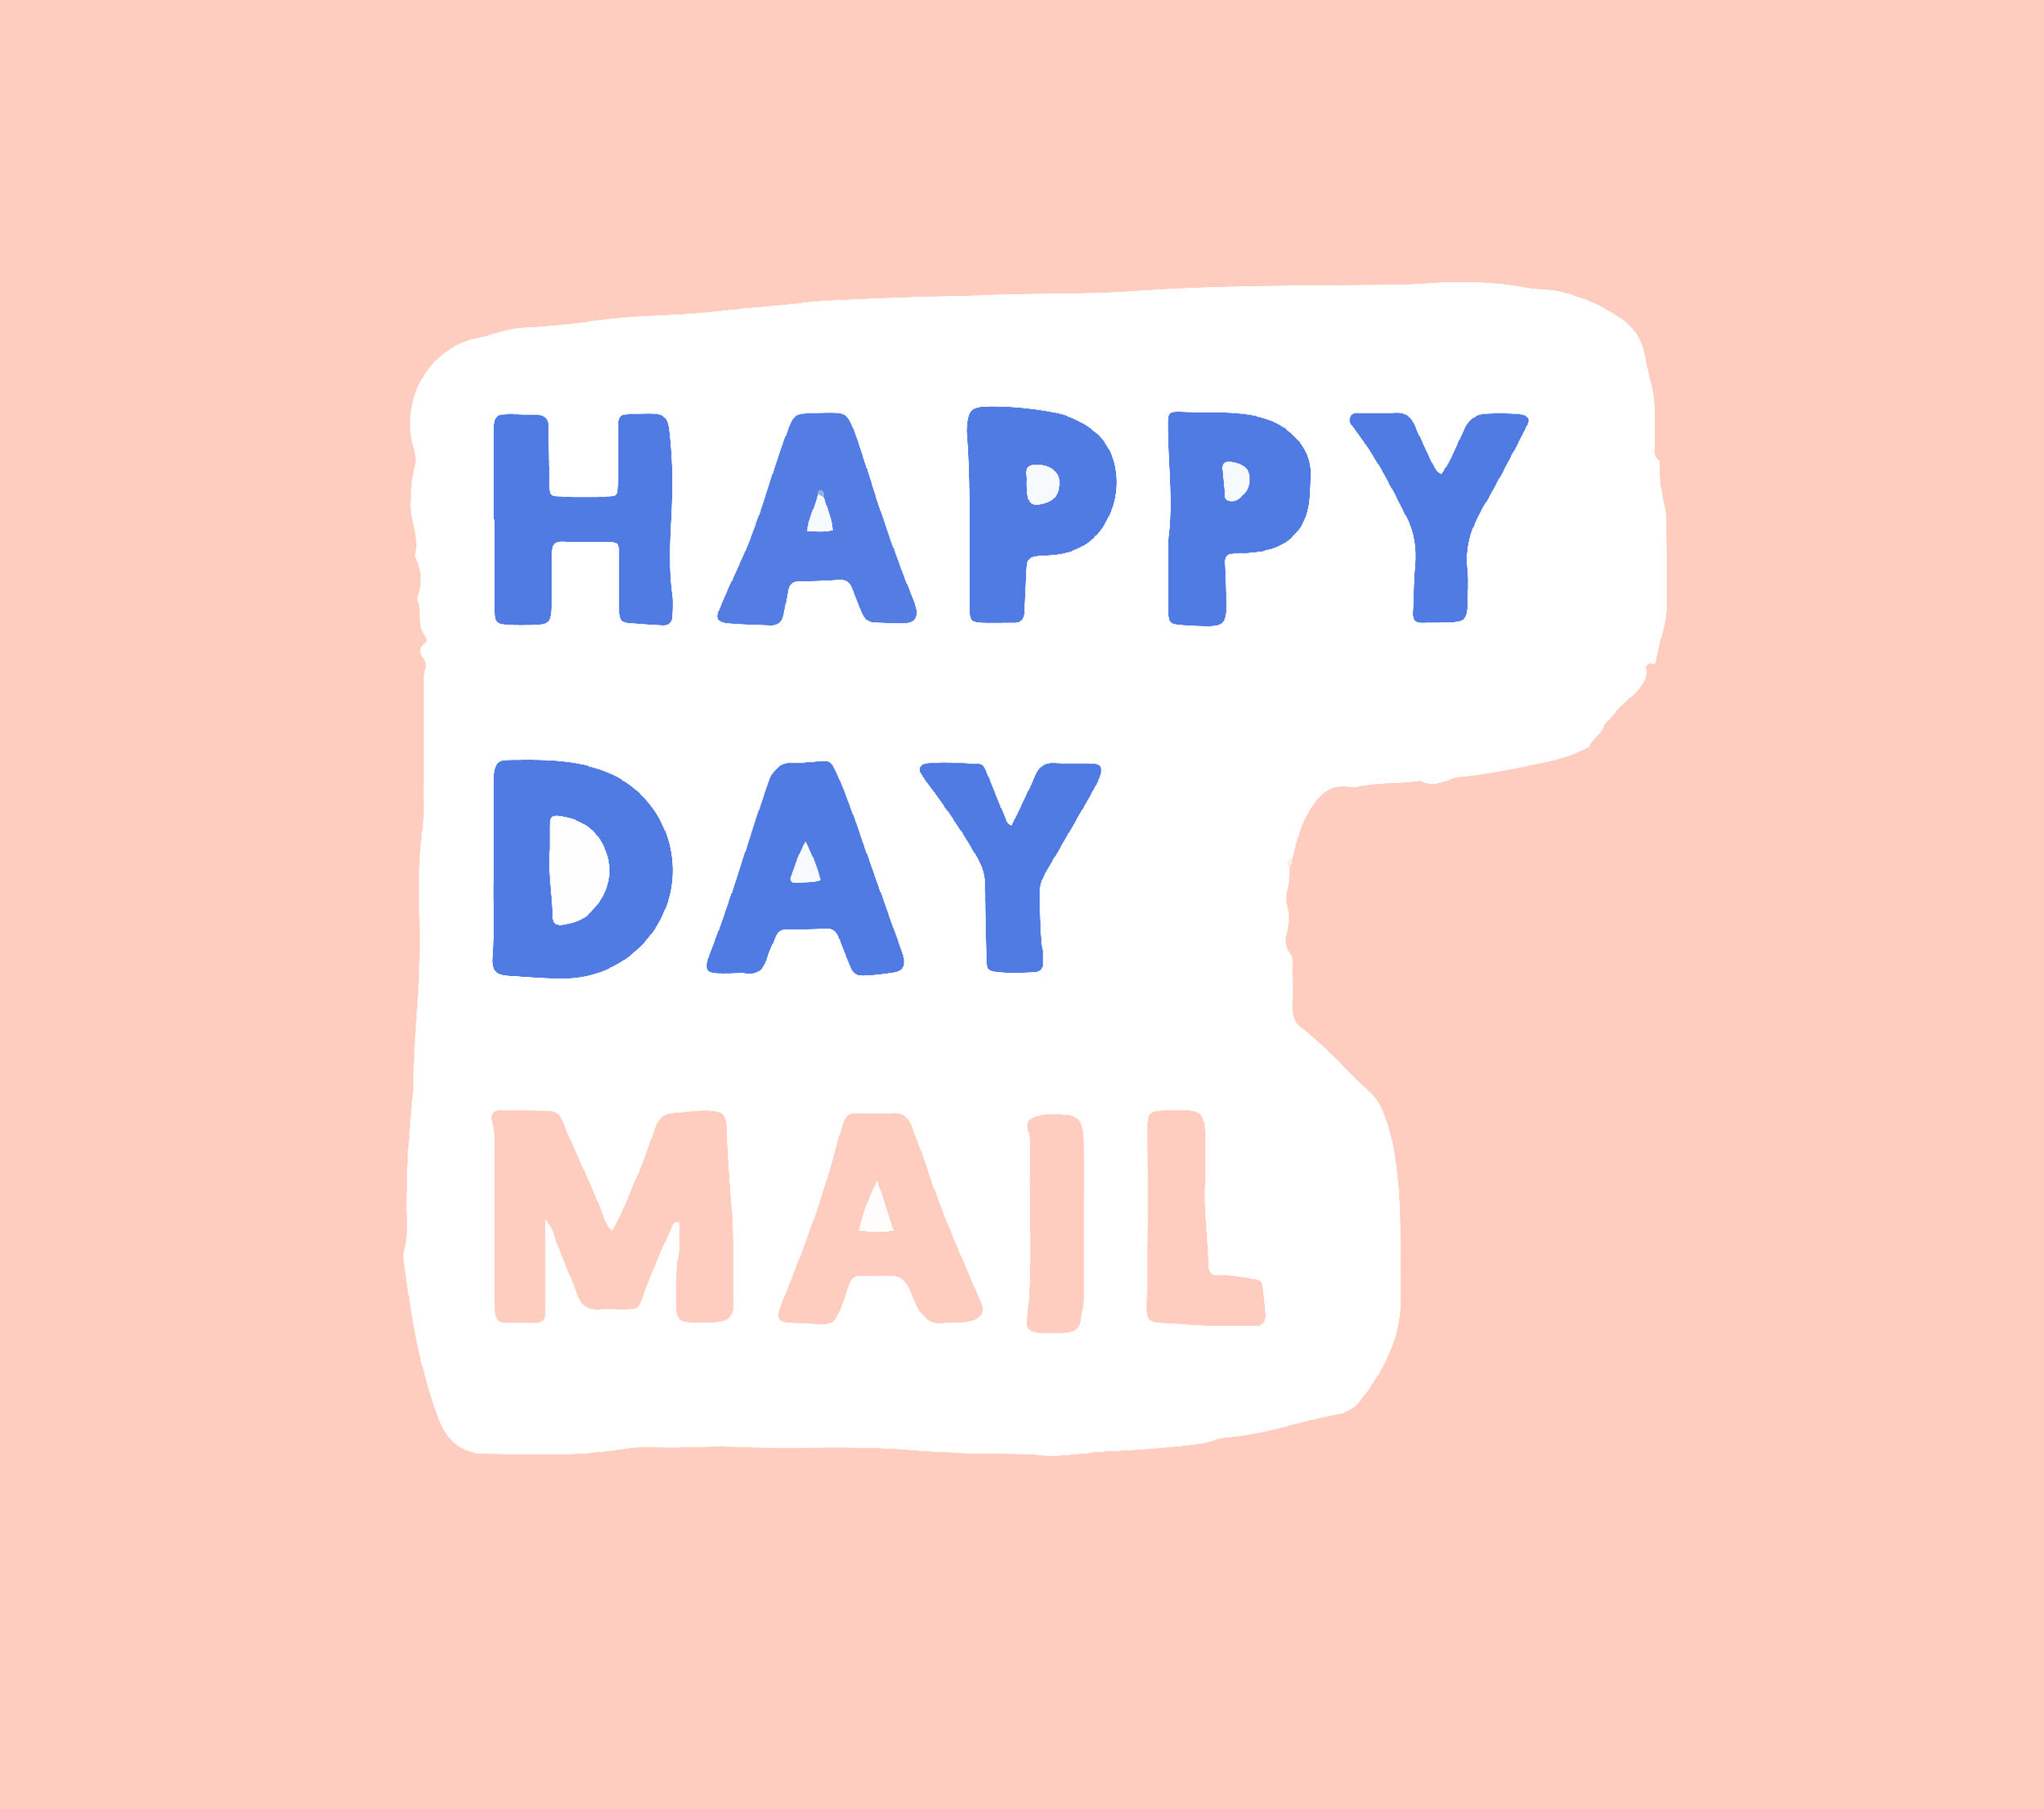 happy day mail logo-01.jpg